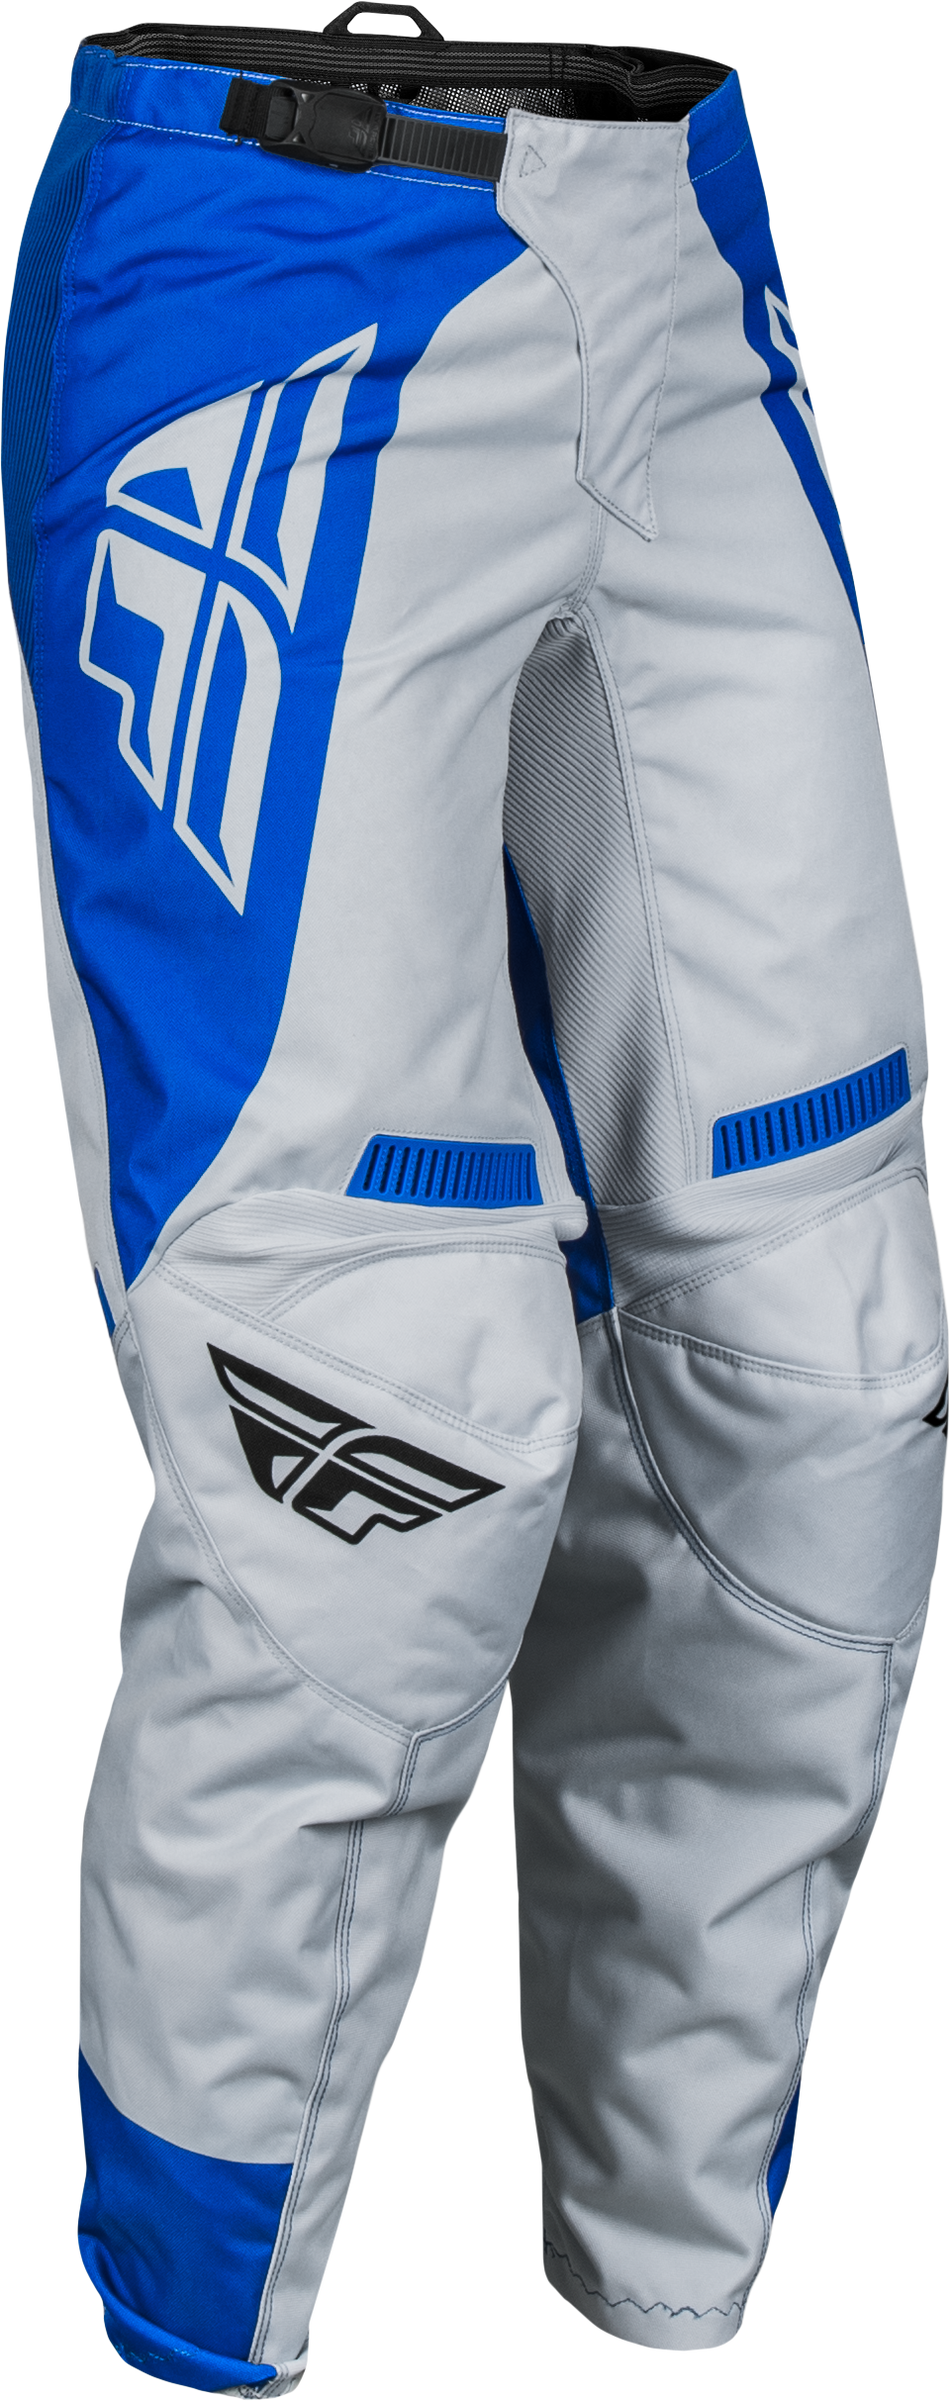 FLY RACING Women's F-16 Pants Arctic Grey/Blue Sz 13/14 377-83013